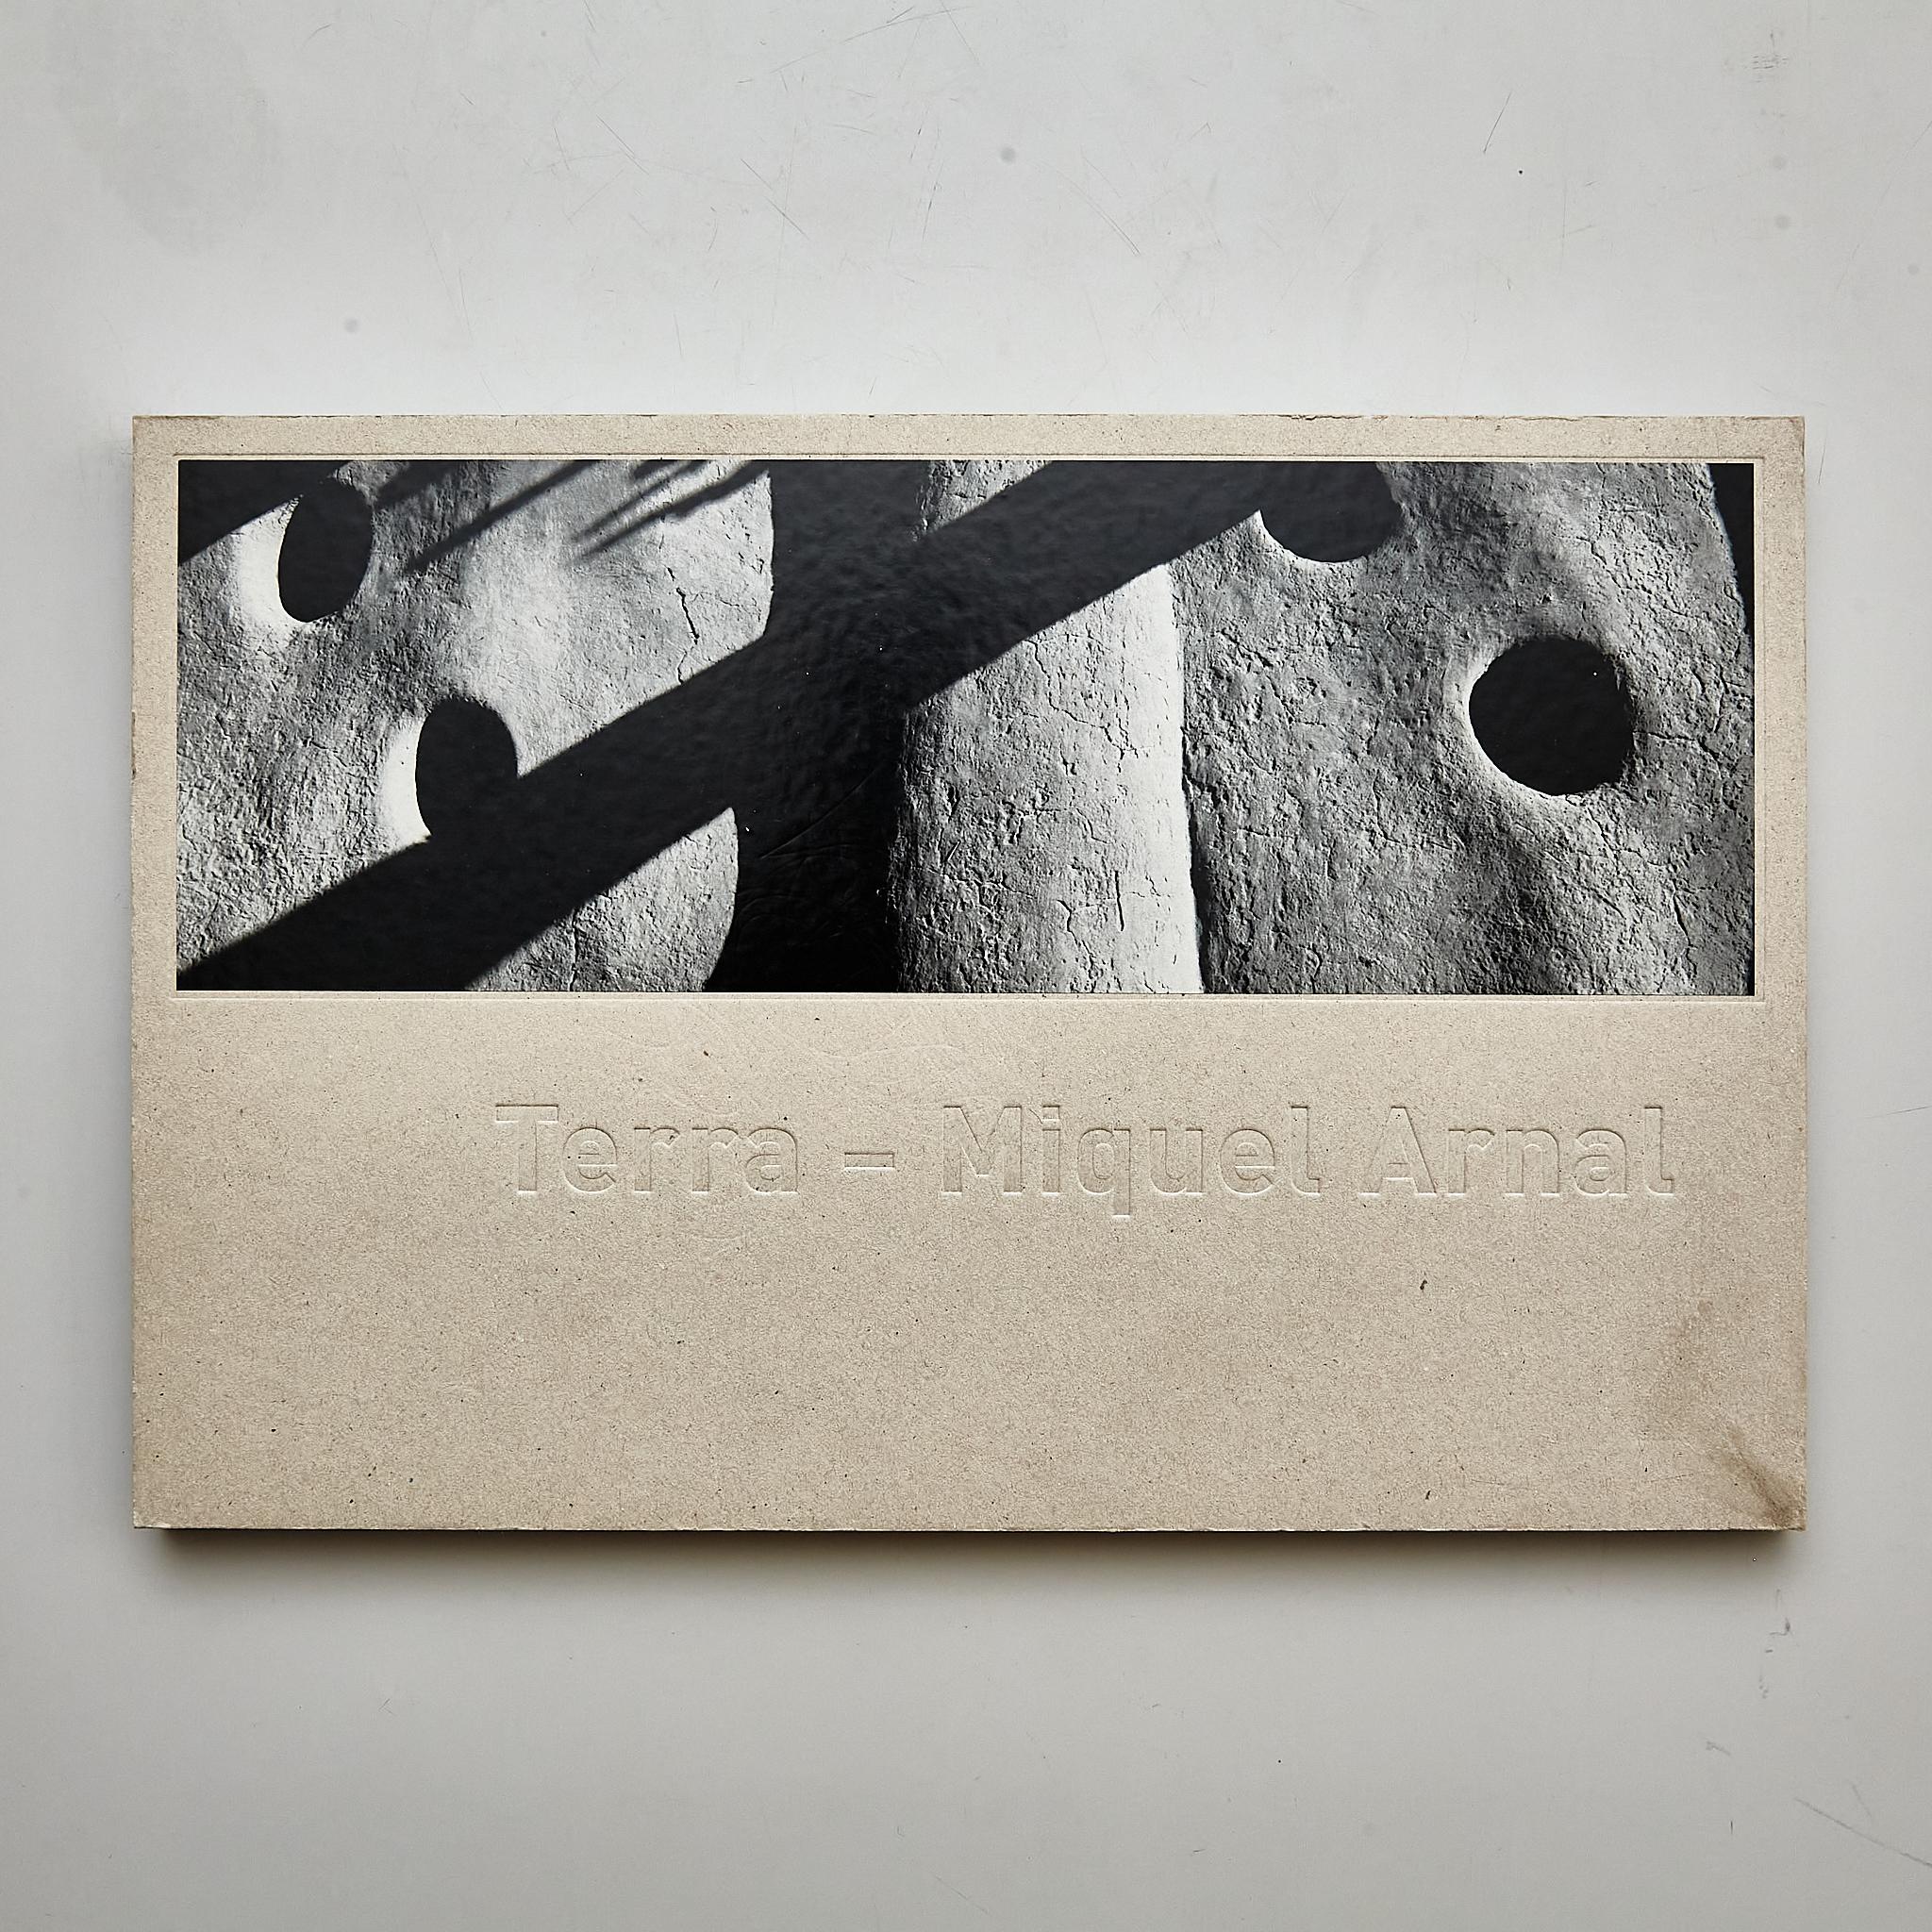 Mid-Century Modern Terra: Miquel Arnal's Stunning Photo Book For Sale